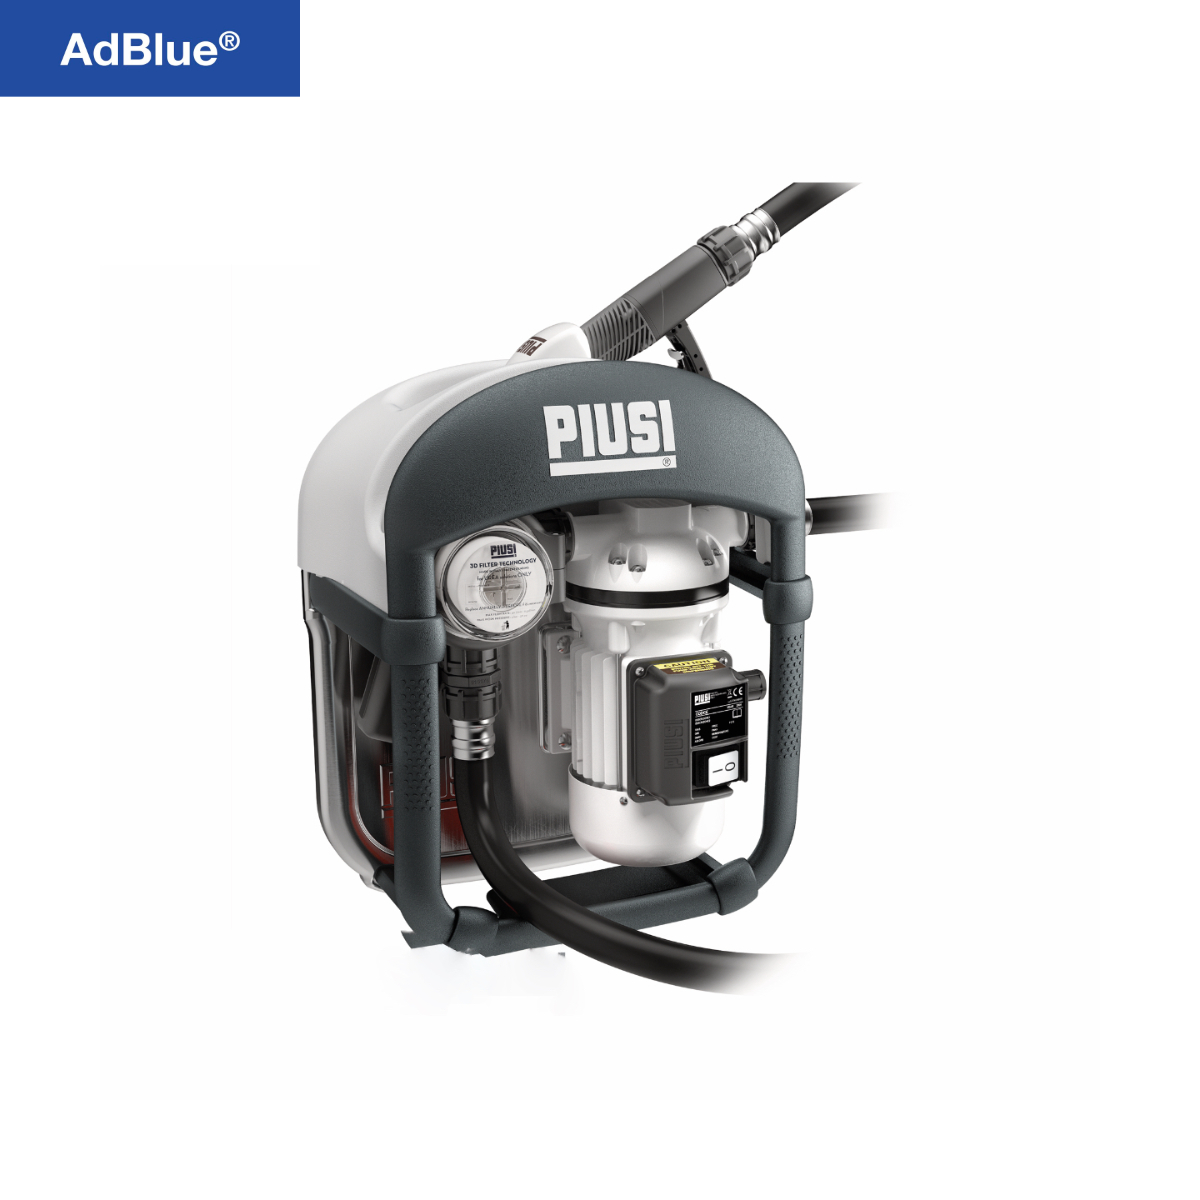 Piusi Dispenser Rifornimento AdBlue | Suzzarablue 3 Basic